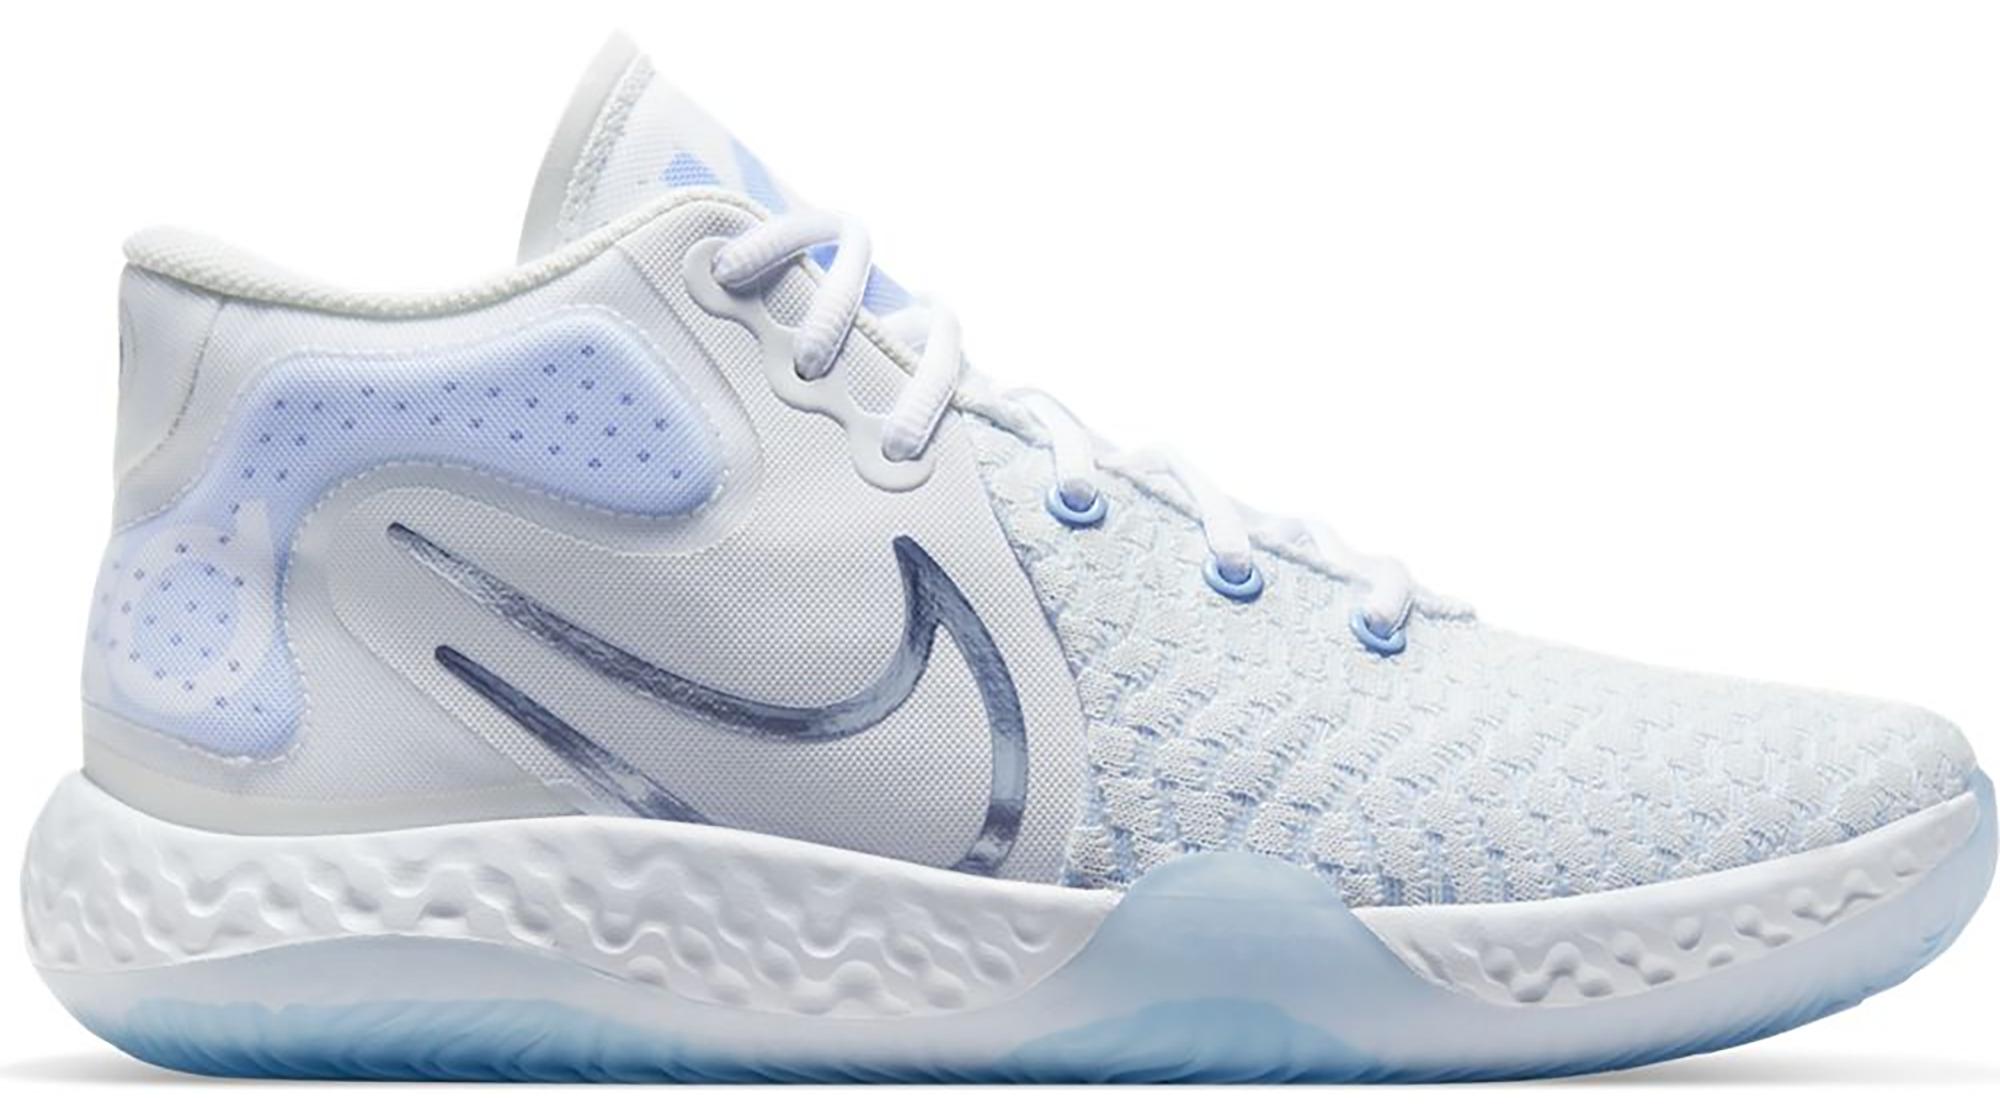 Nike Rubber Kd Trey 5 Viii Basketball Shoe (white) for Men - Save 50%